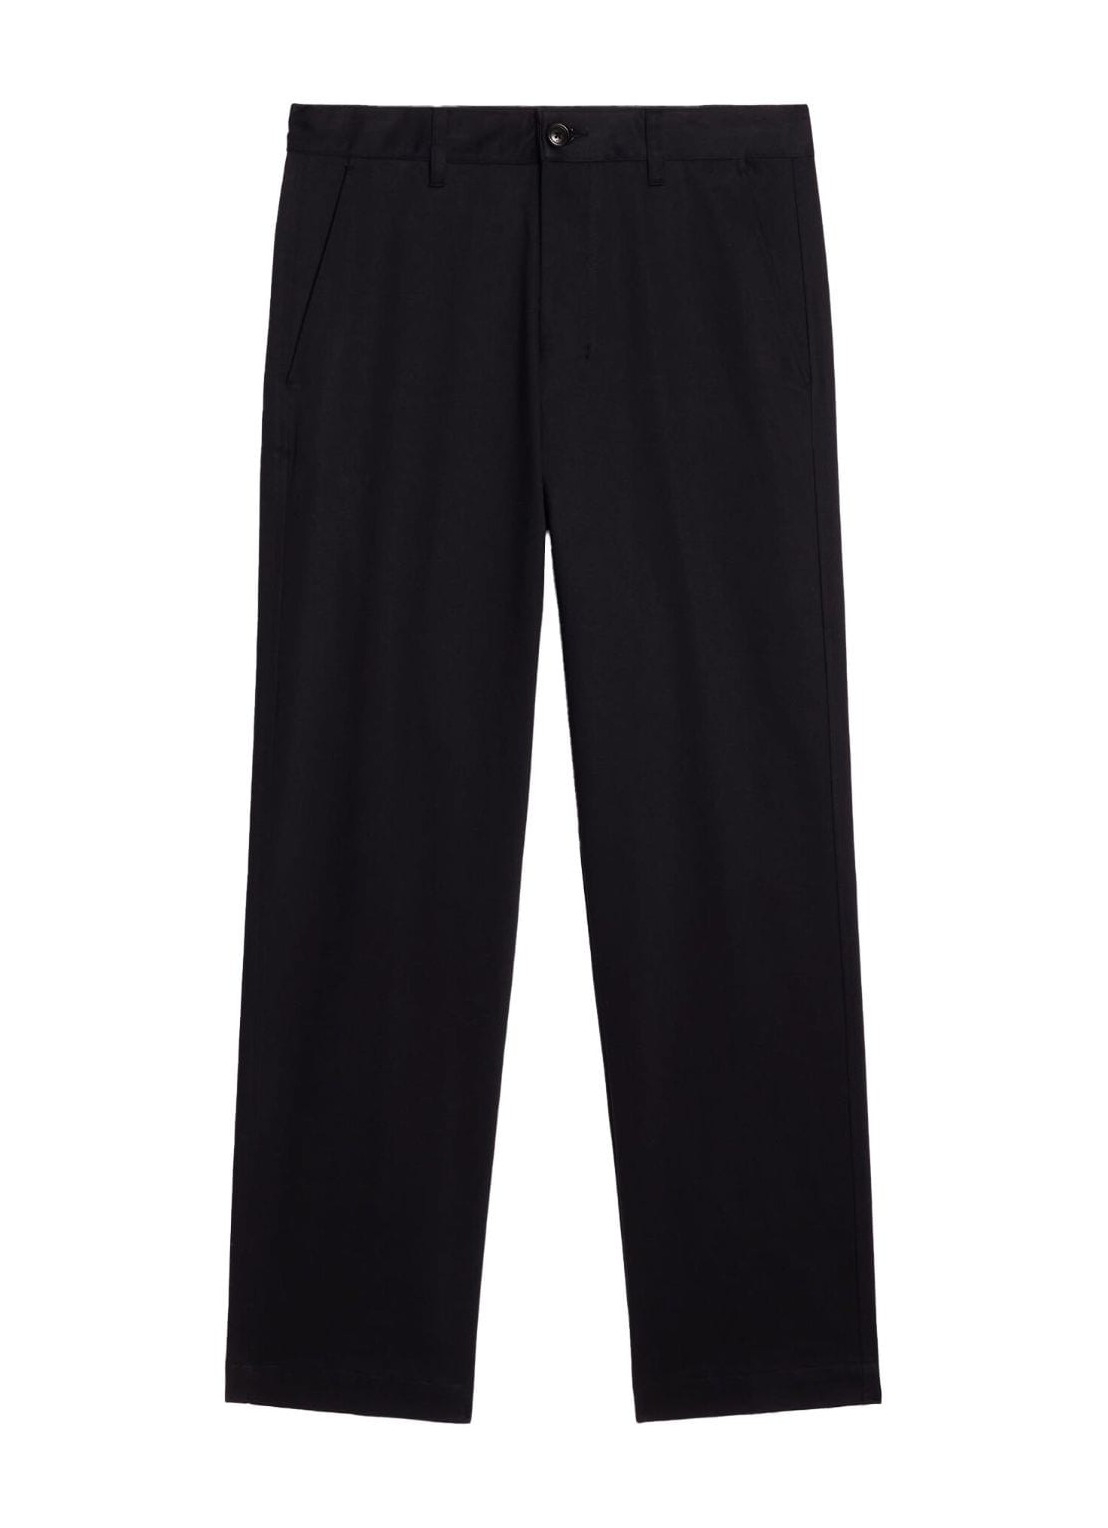 Pantalon ami pant  manstraight chino trousers - htr005co0009 001 talla negro
 